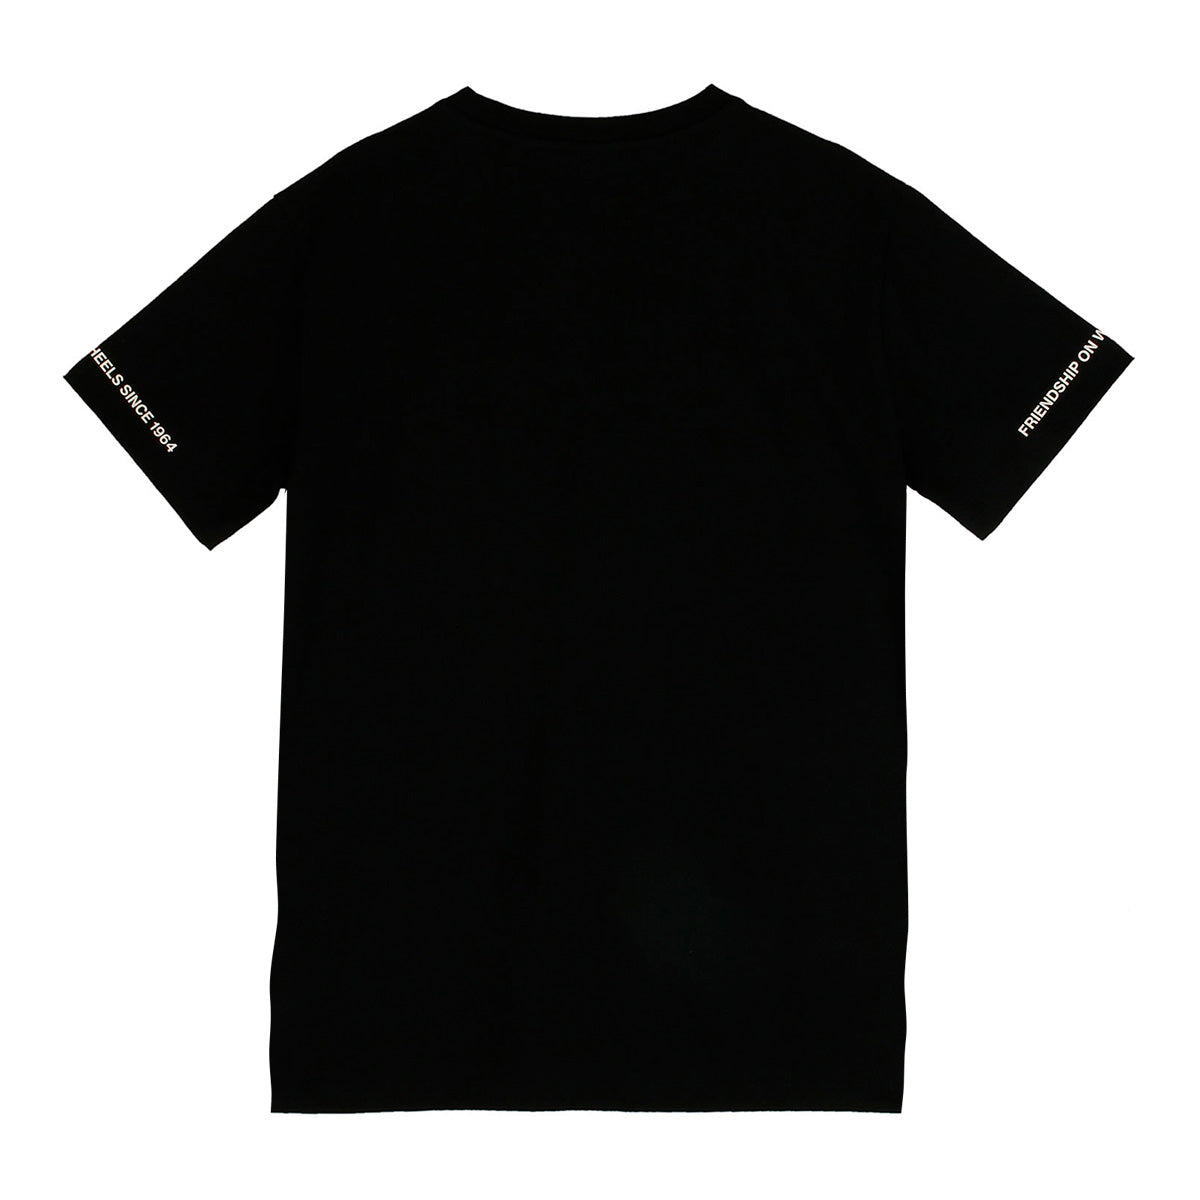 Camiseta bolsillo inclinado (Off-White/Negro)